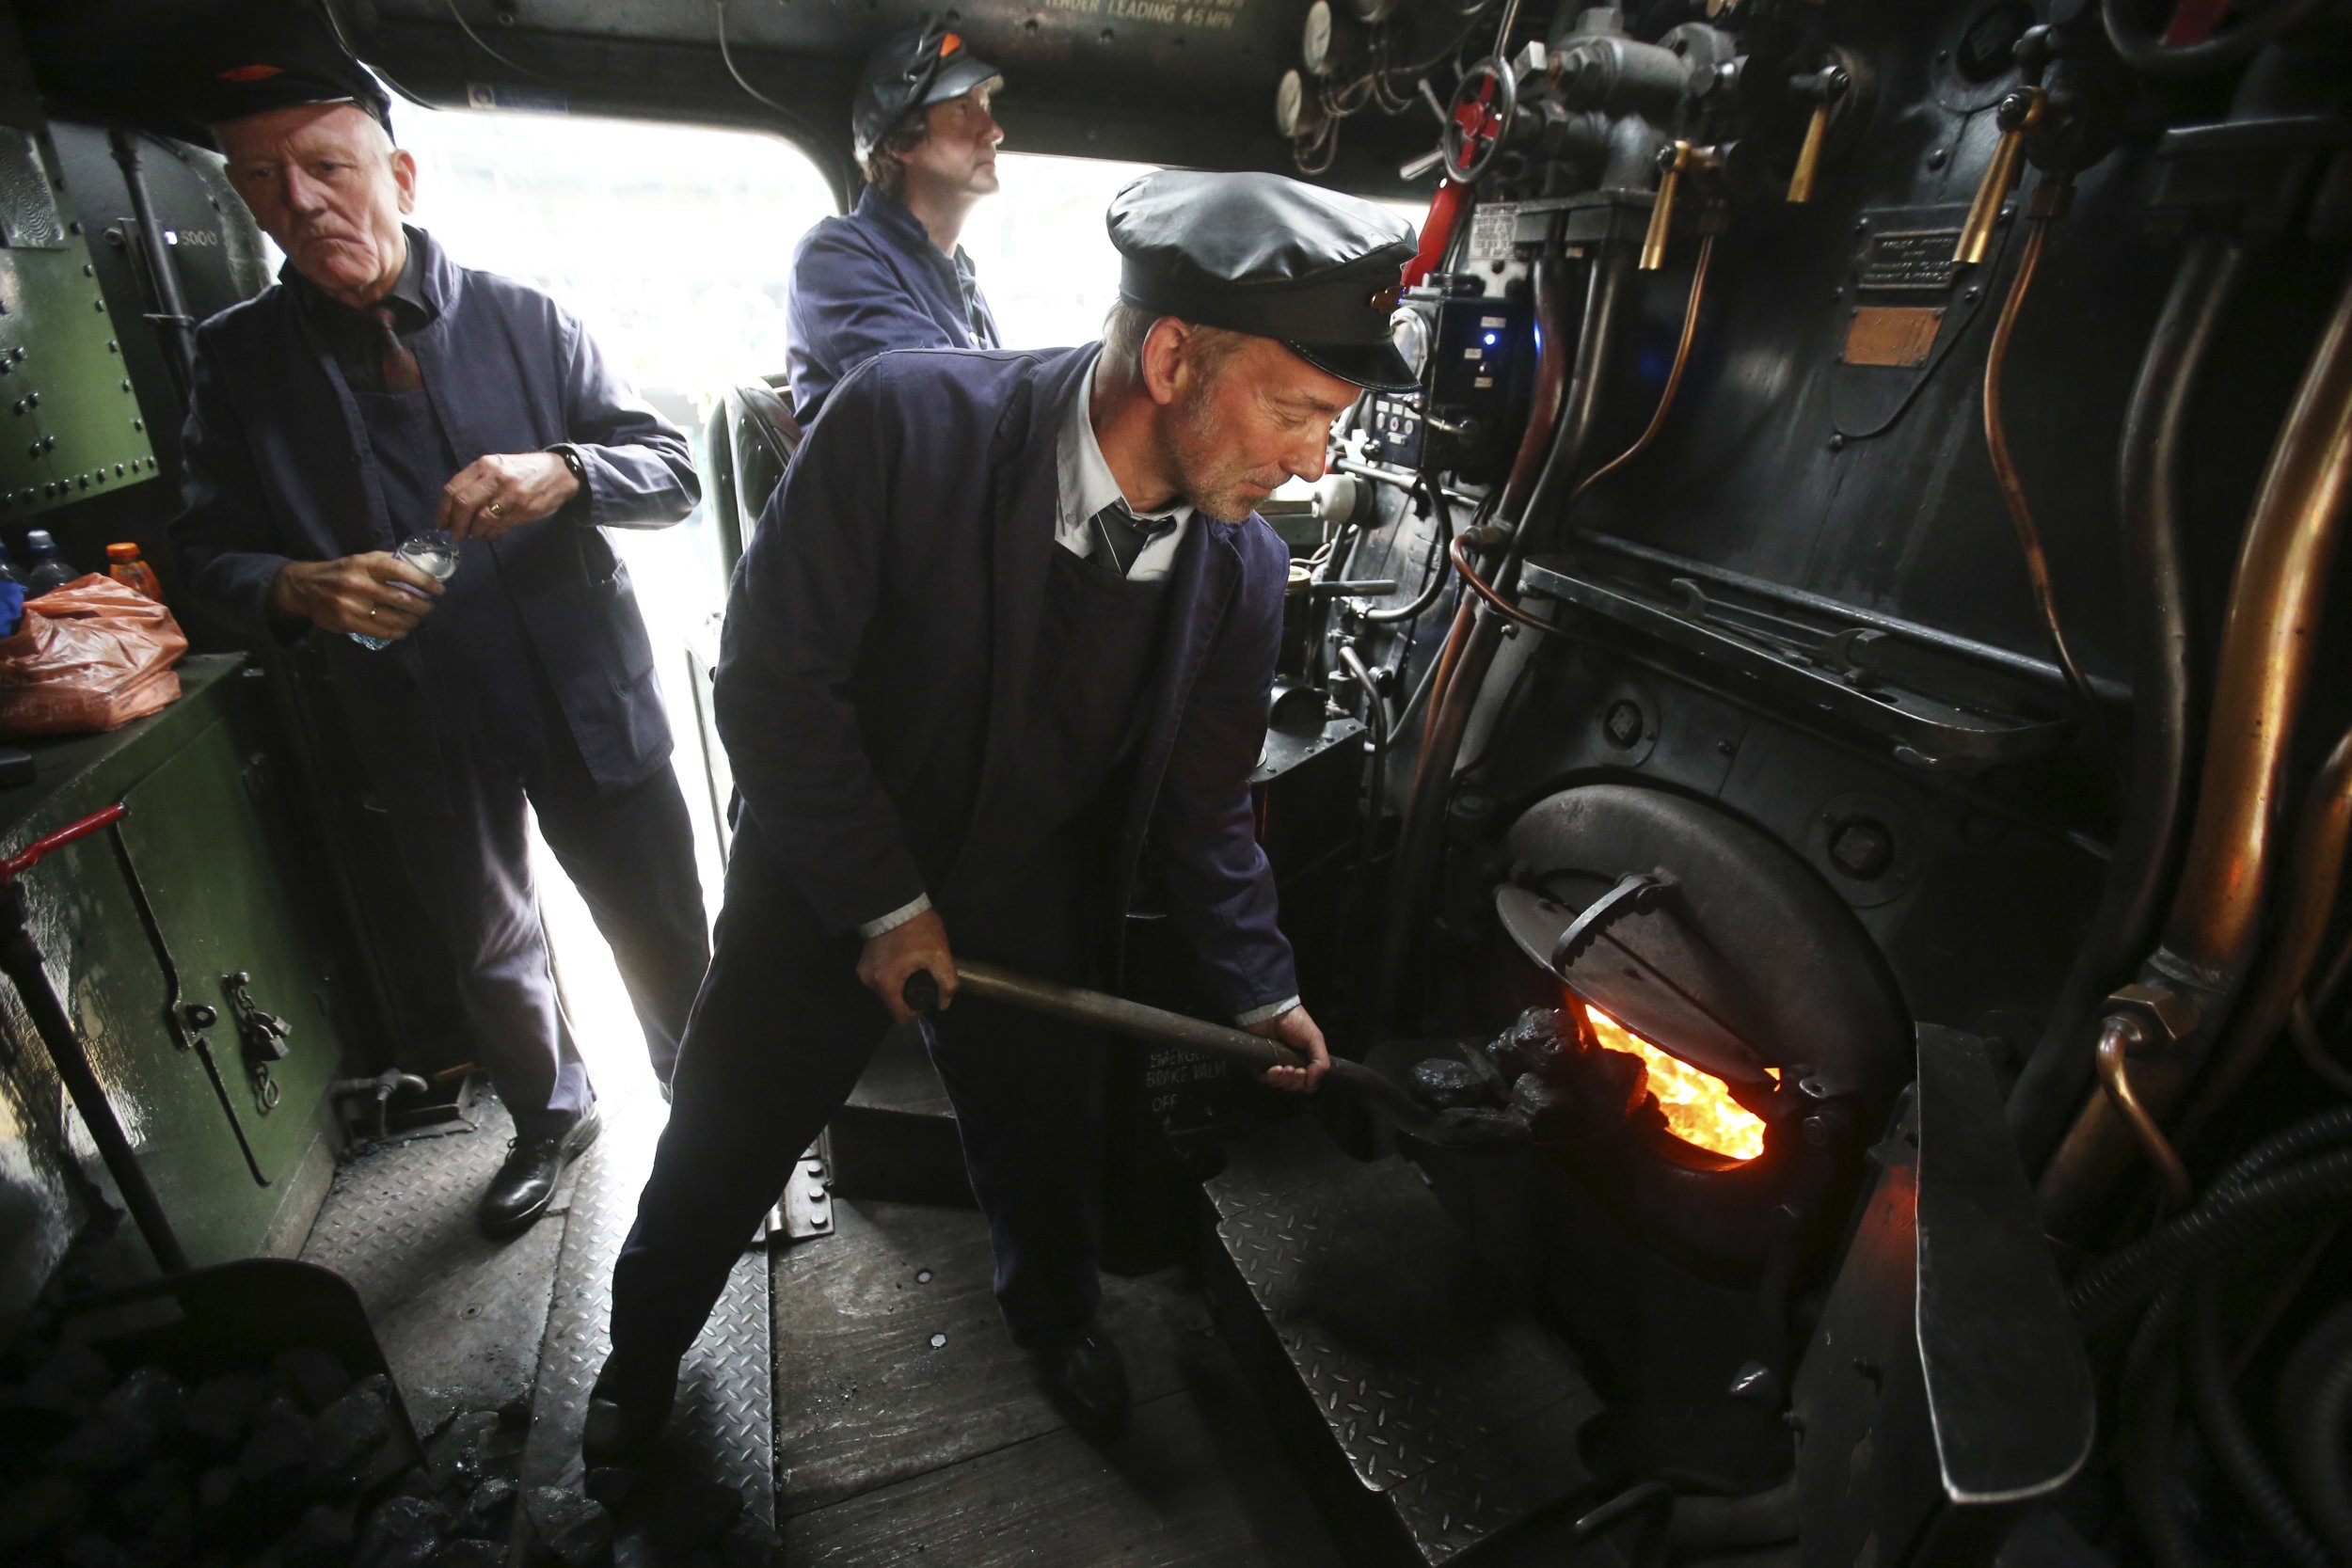 1228  L-R Jim Smith, Steve Hanczar and Tony Jones work in the engine of a steam train at Edinburghs Waverley Station